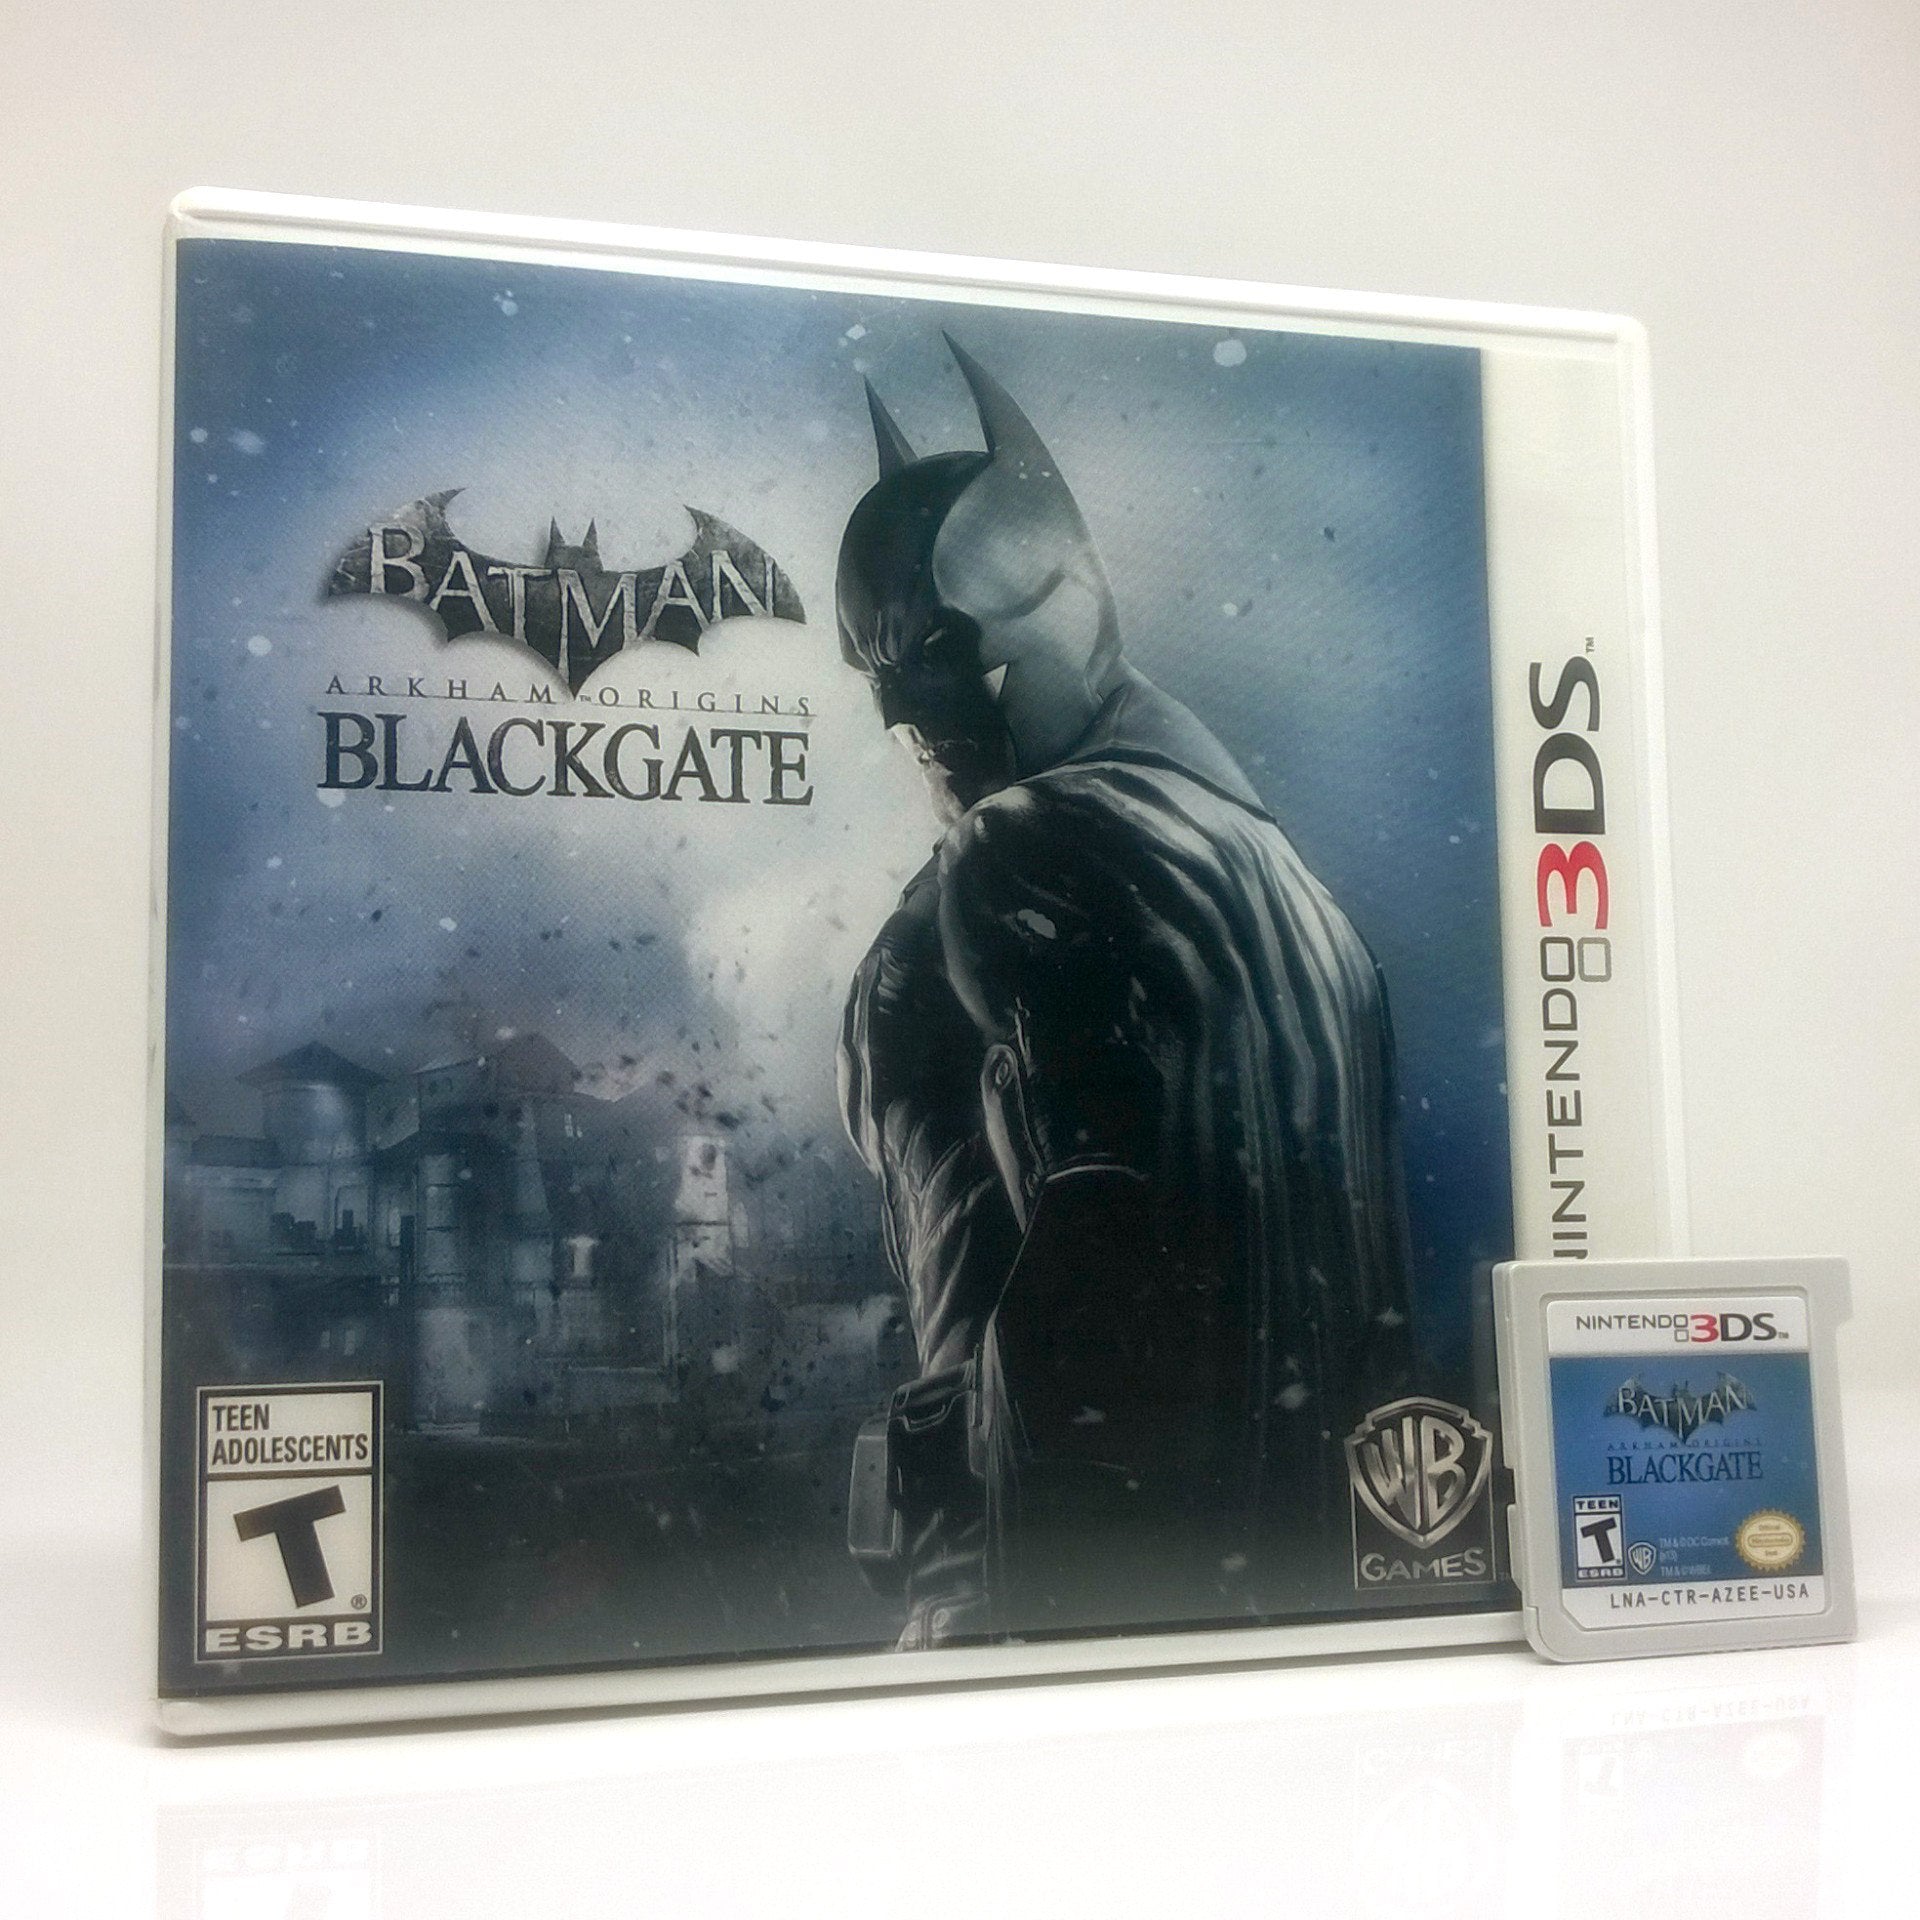 Batman: Arkham Origins Blackgate Nintendo 3DS Game